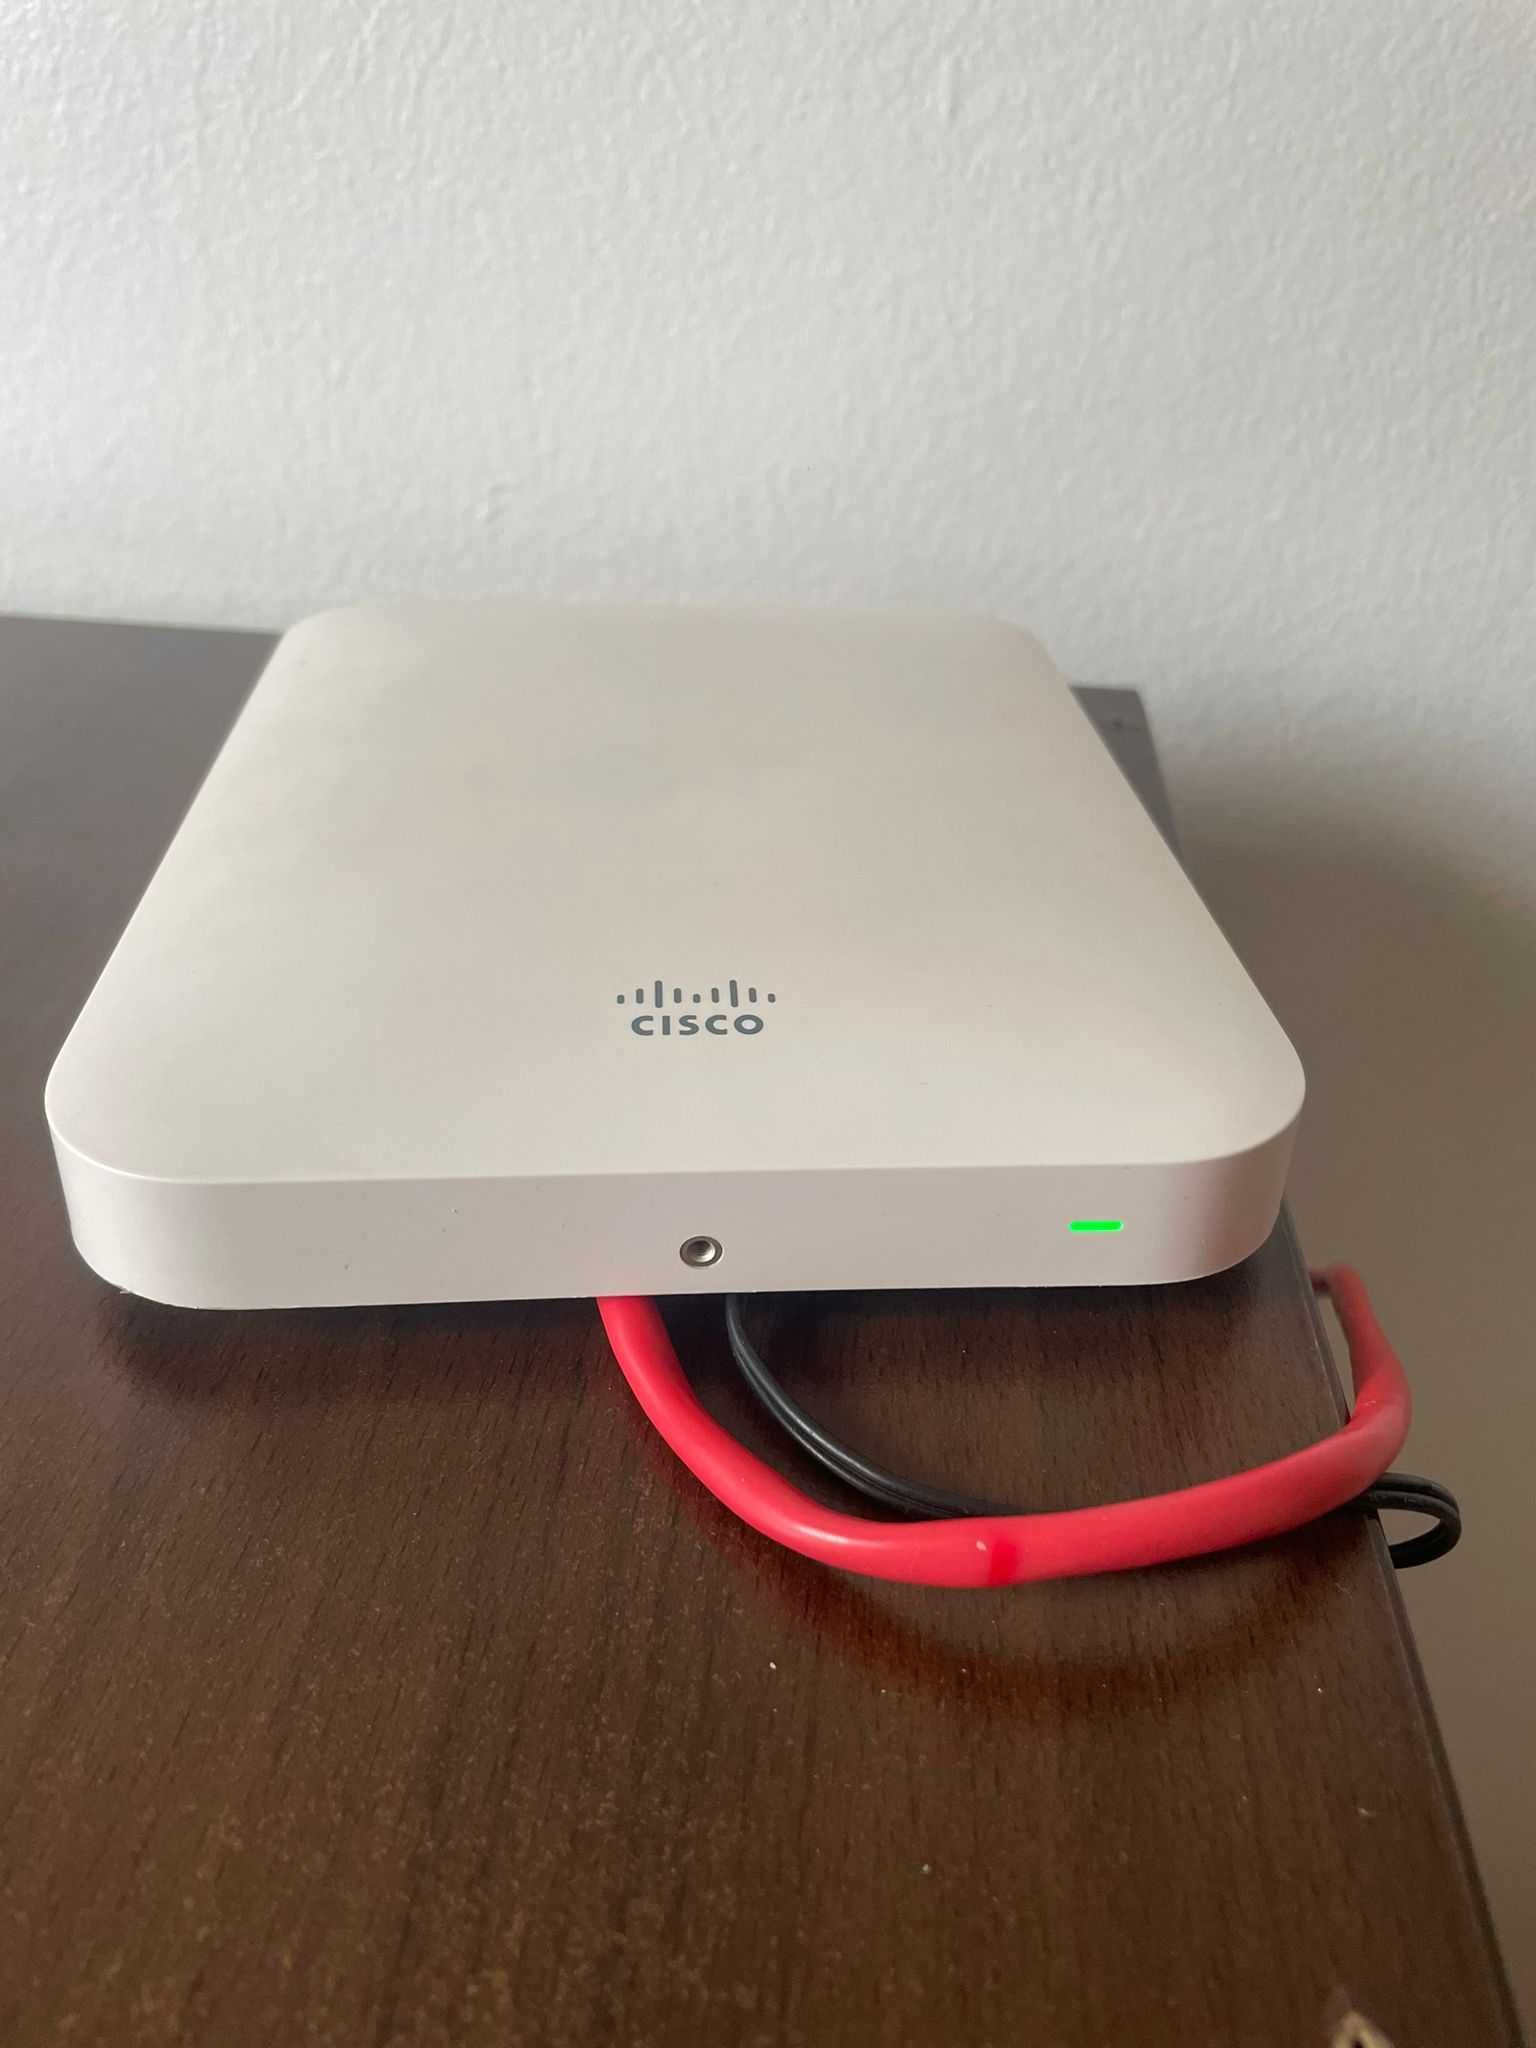 Cisco Meraki Wireless Network Access Point - White (MR18)